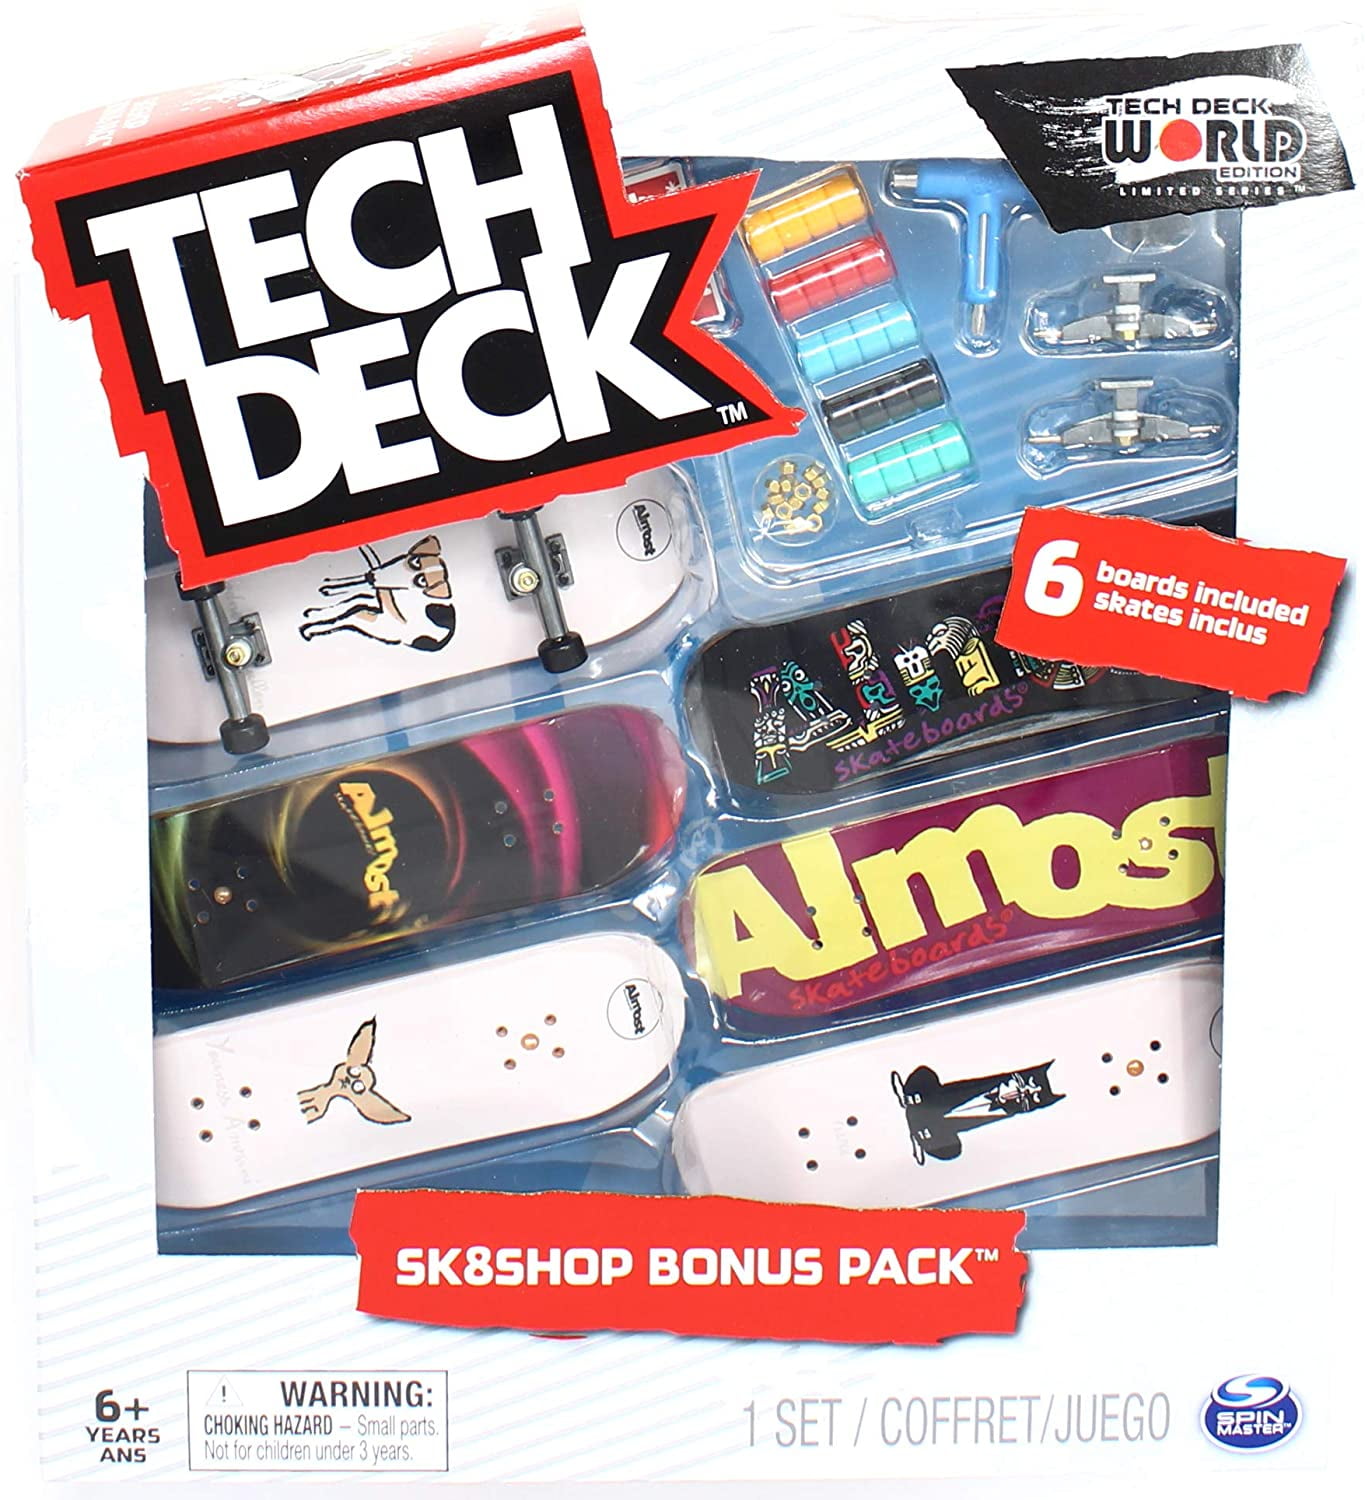 Santa Cruz Tech-Deck Sk8shop Bonus Pack World Edition Limited Series 2020 